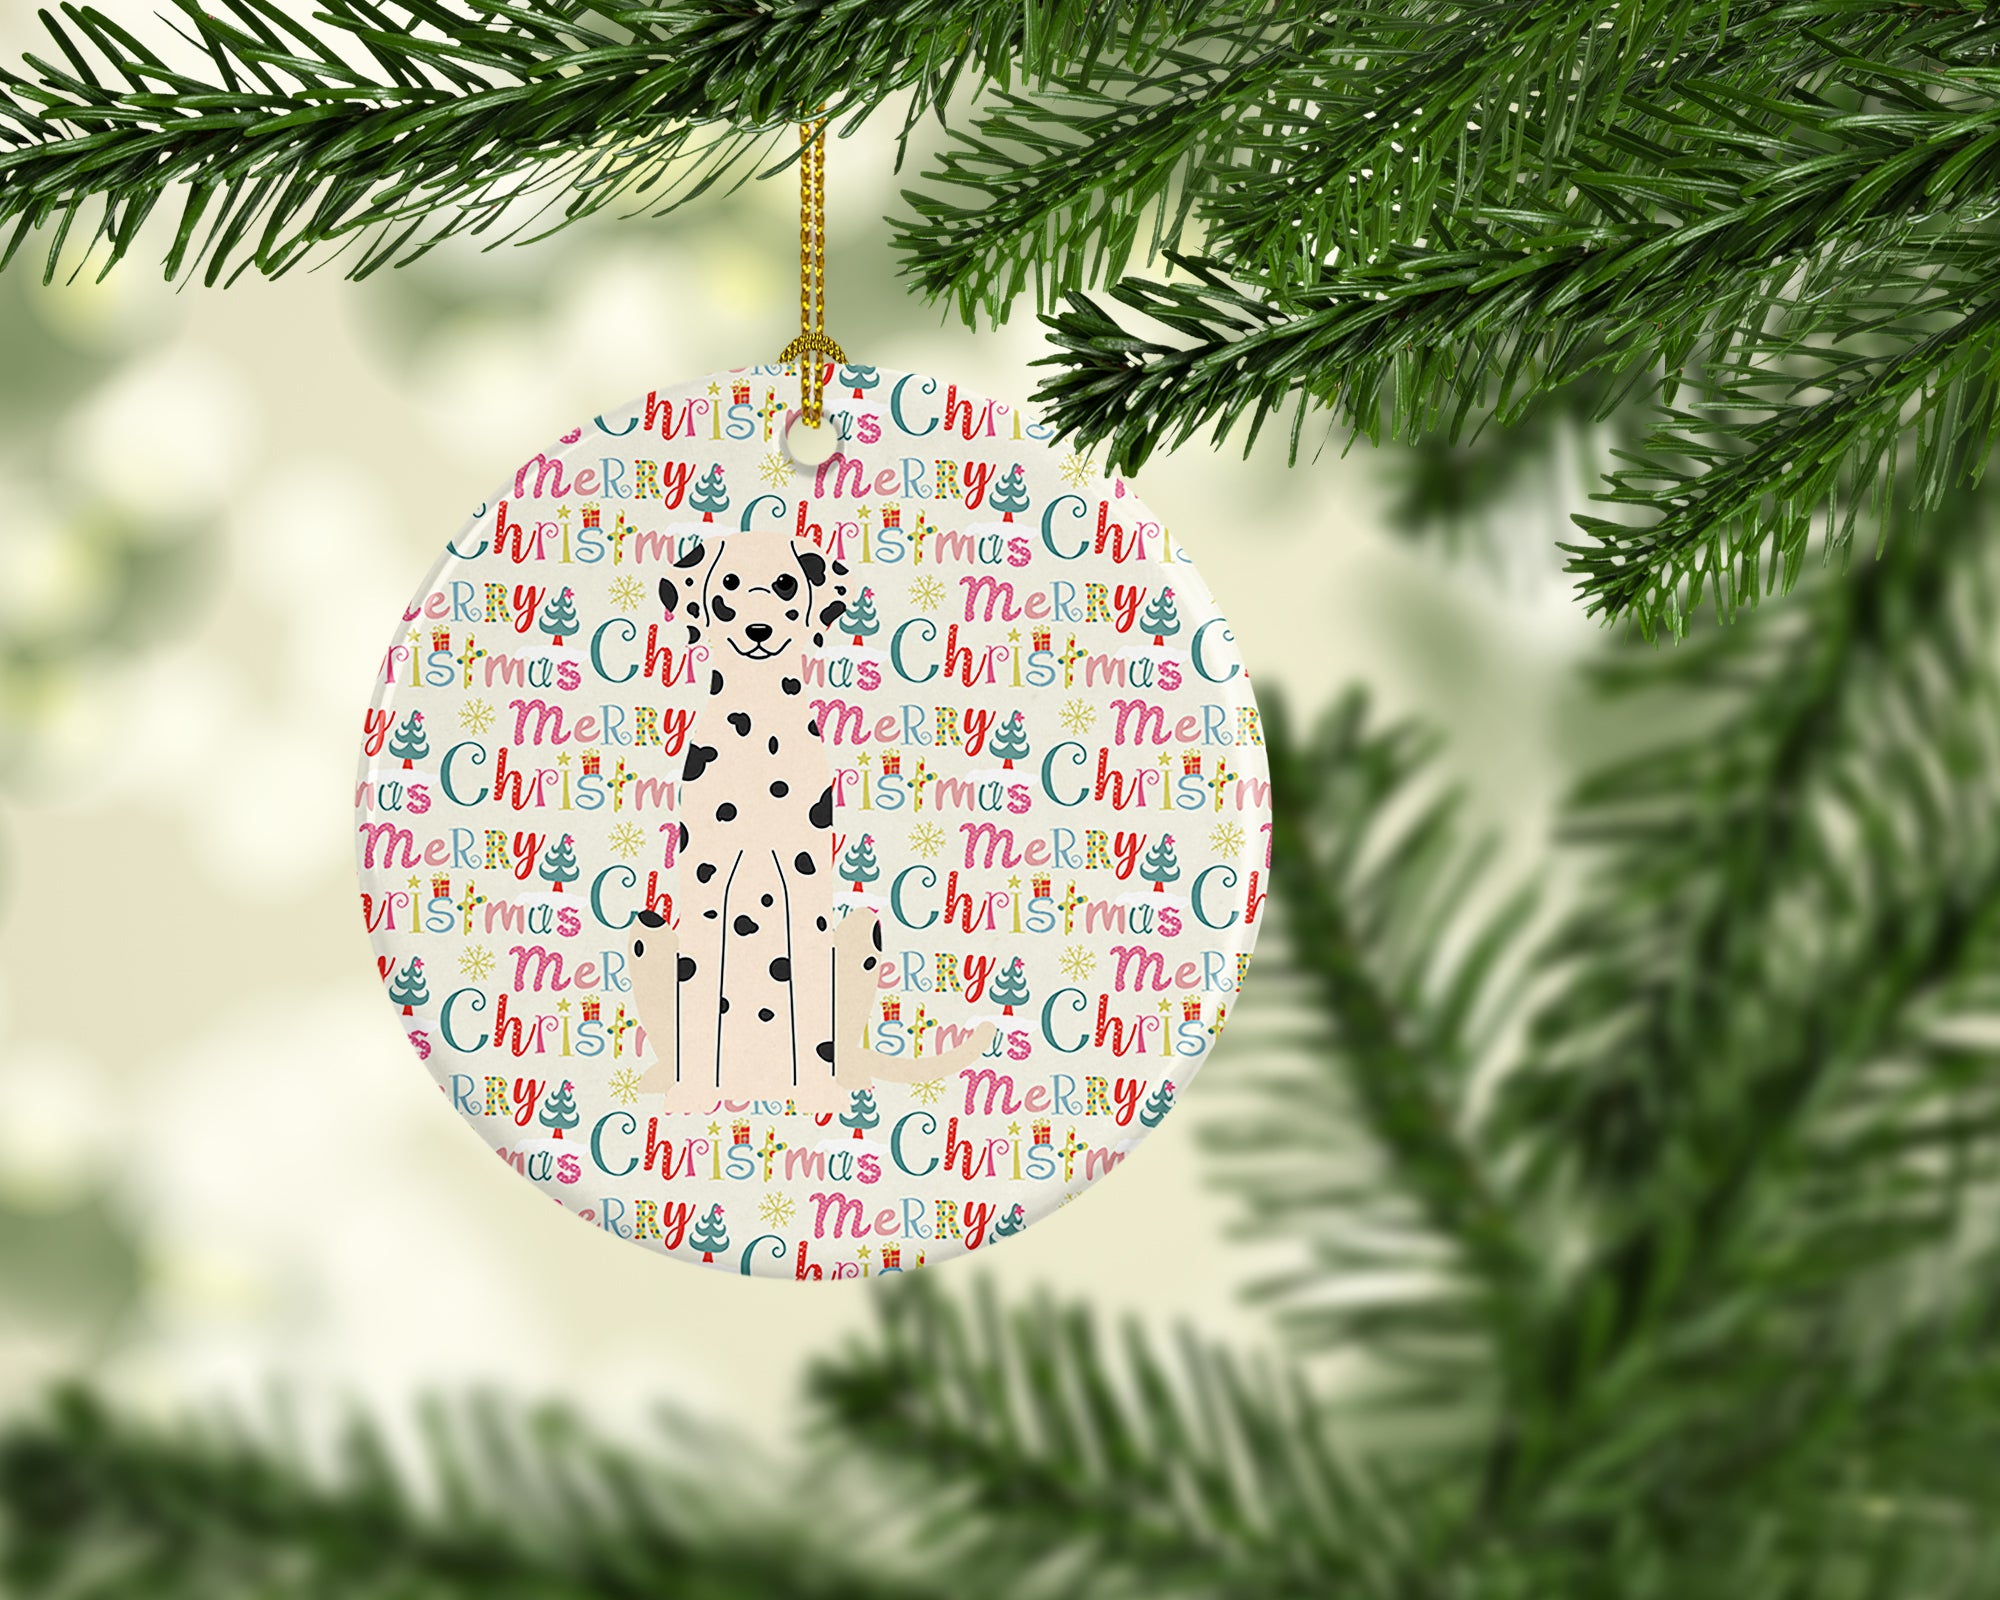 Buy this Merry Christmas Dalmatian Ceramic Ornament